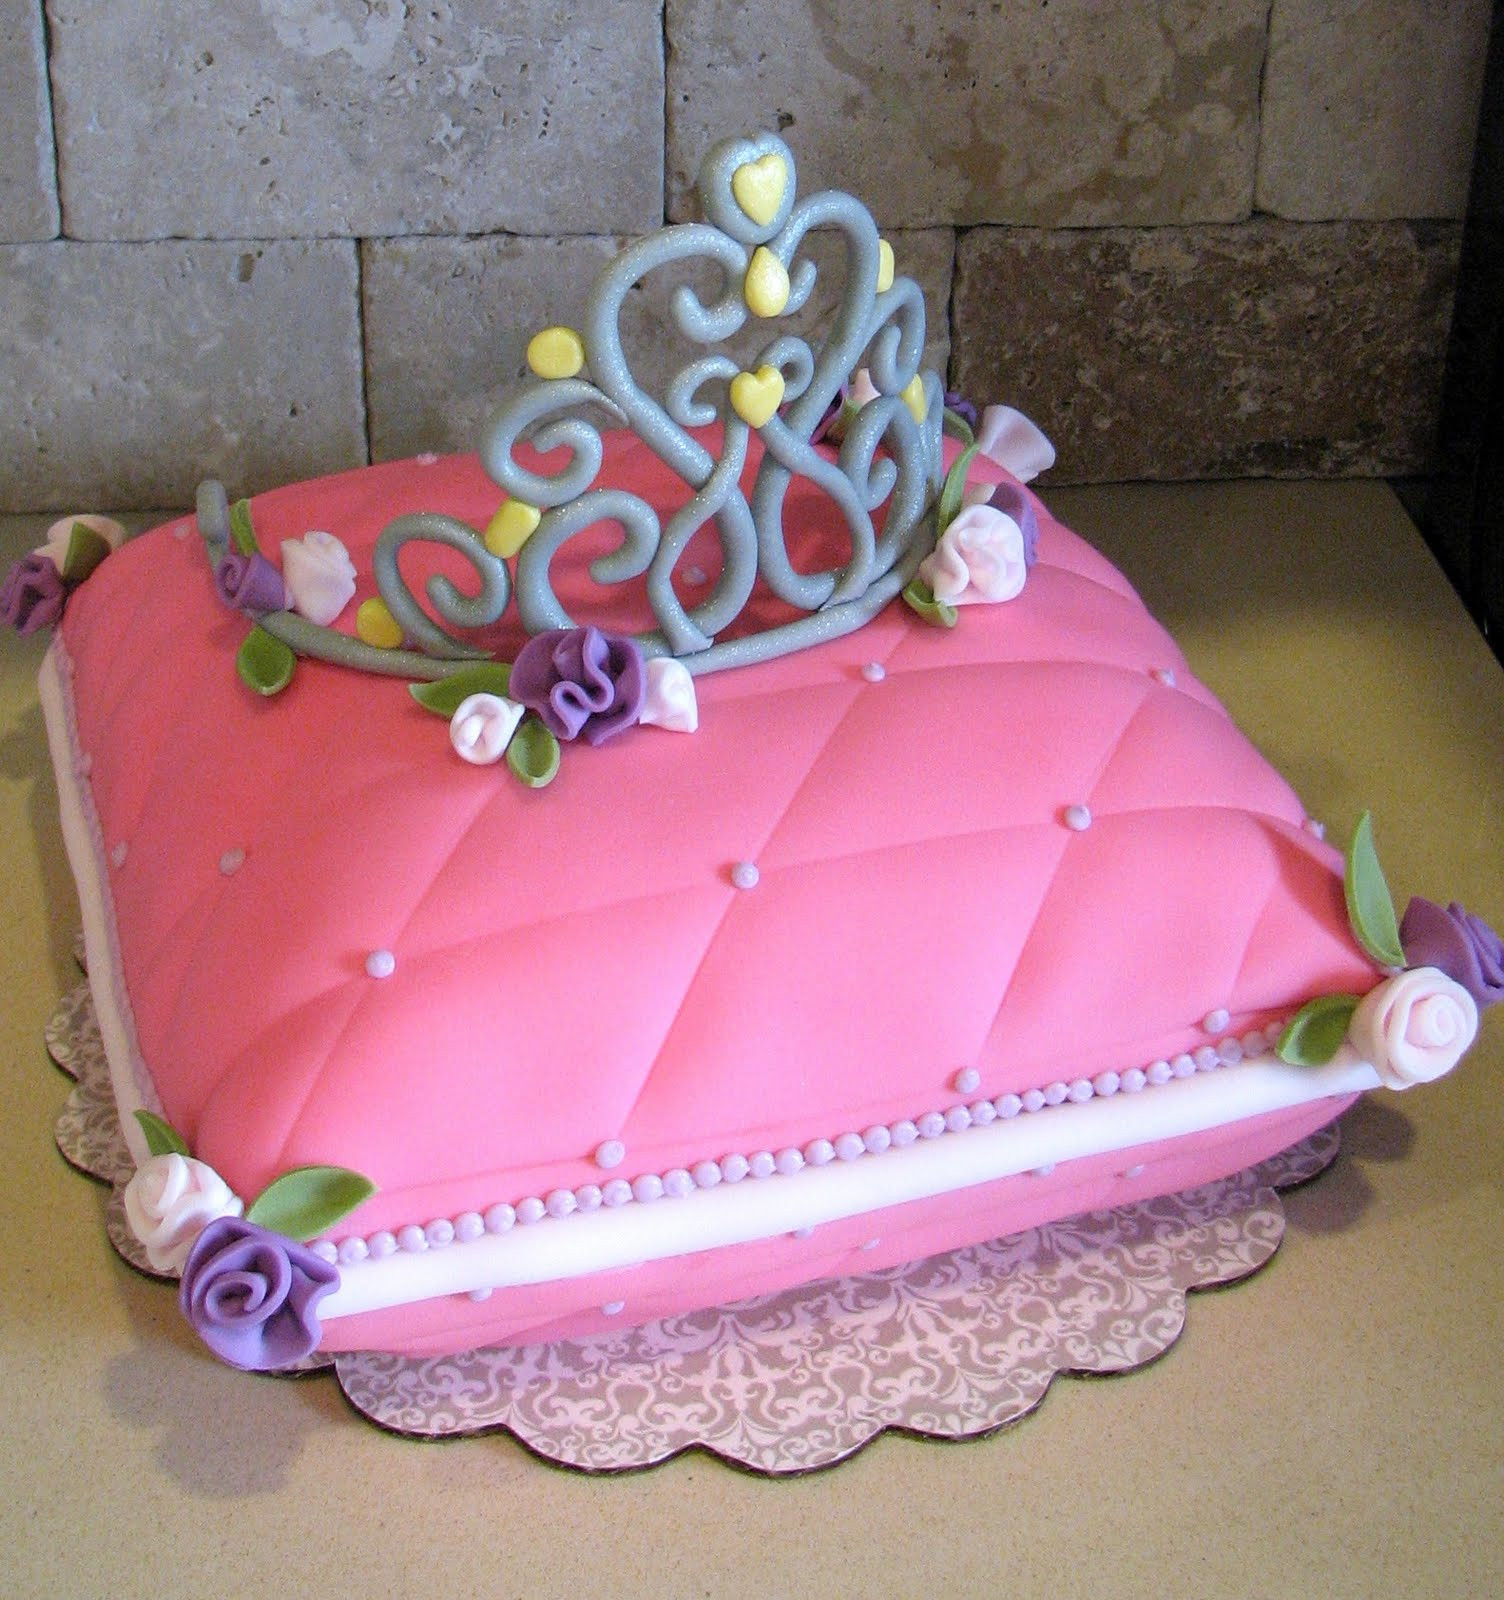 Costco Birthday Cake Designs
 Costco Birthday Cakes Cake Ideas and Designs